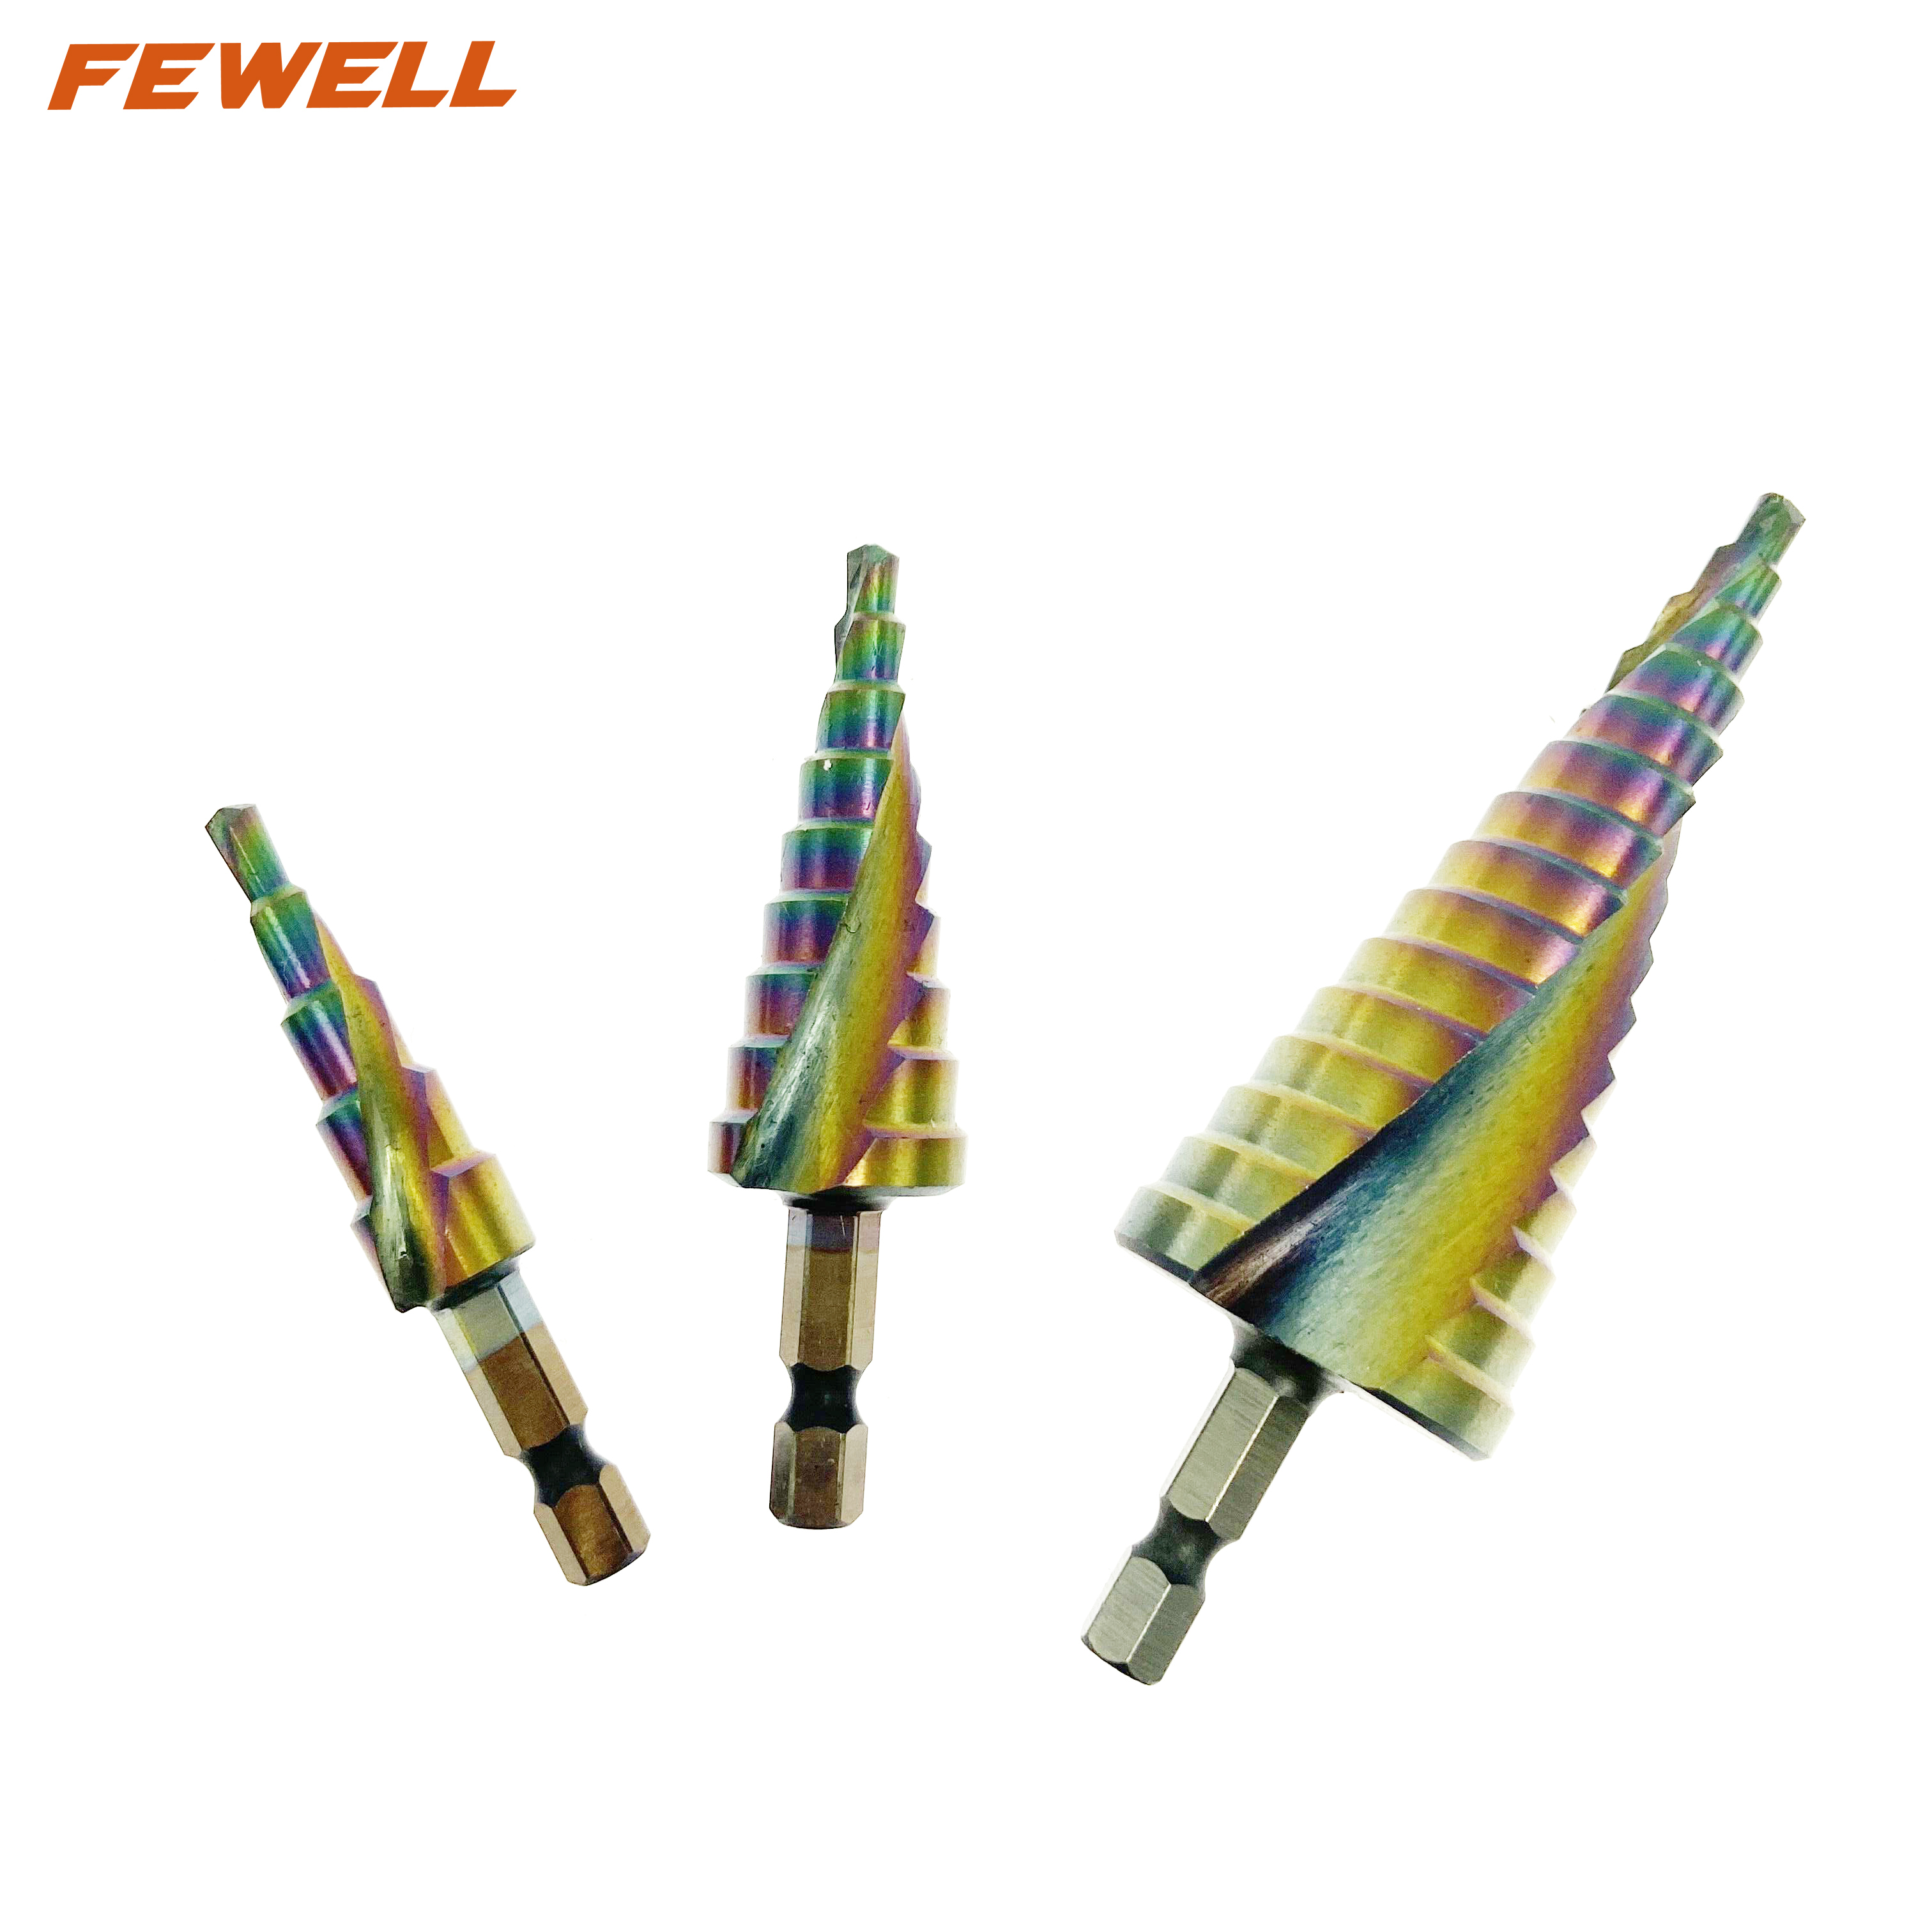 3 ADET 4-12mm 4-20mm 4-32mm HSS M35 Altıgen Şaft Elektrikli El Aletleri spiral flüt Titanyum Adım Matkap Uçları Metal Sondaj için